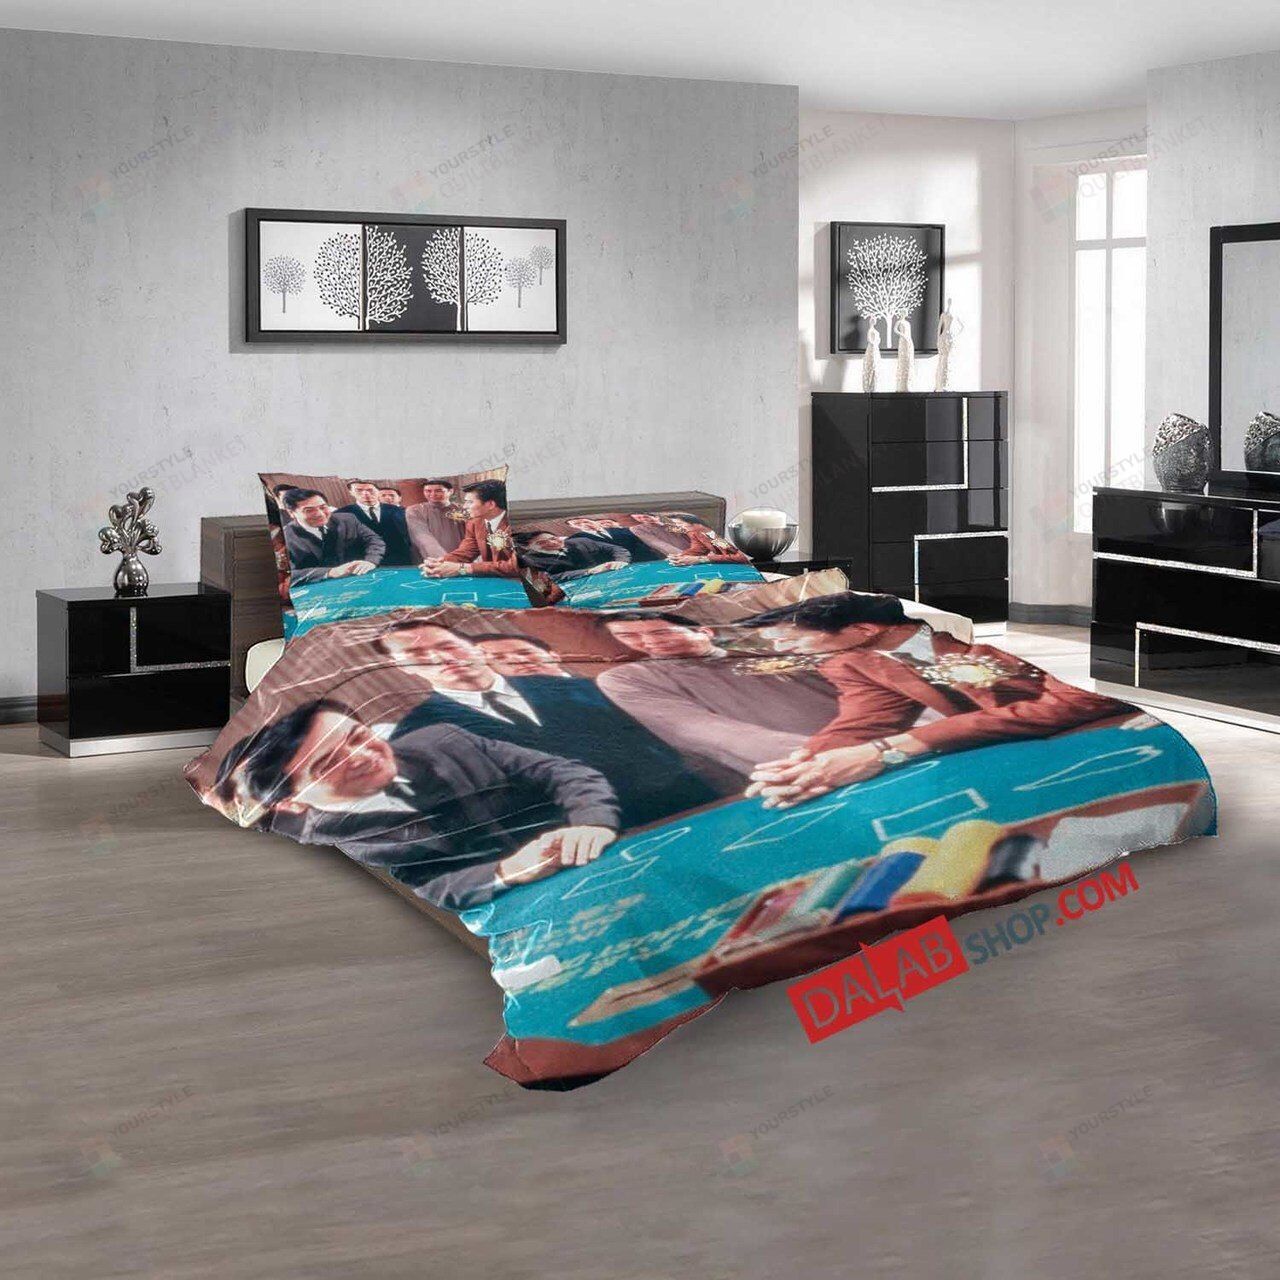 Movie Casino Tycoon V 3d Duvet Cover Bedroom Sets Bedding Sets